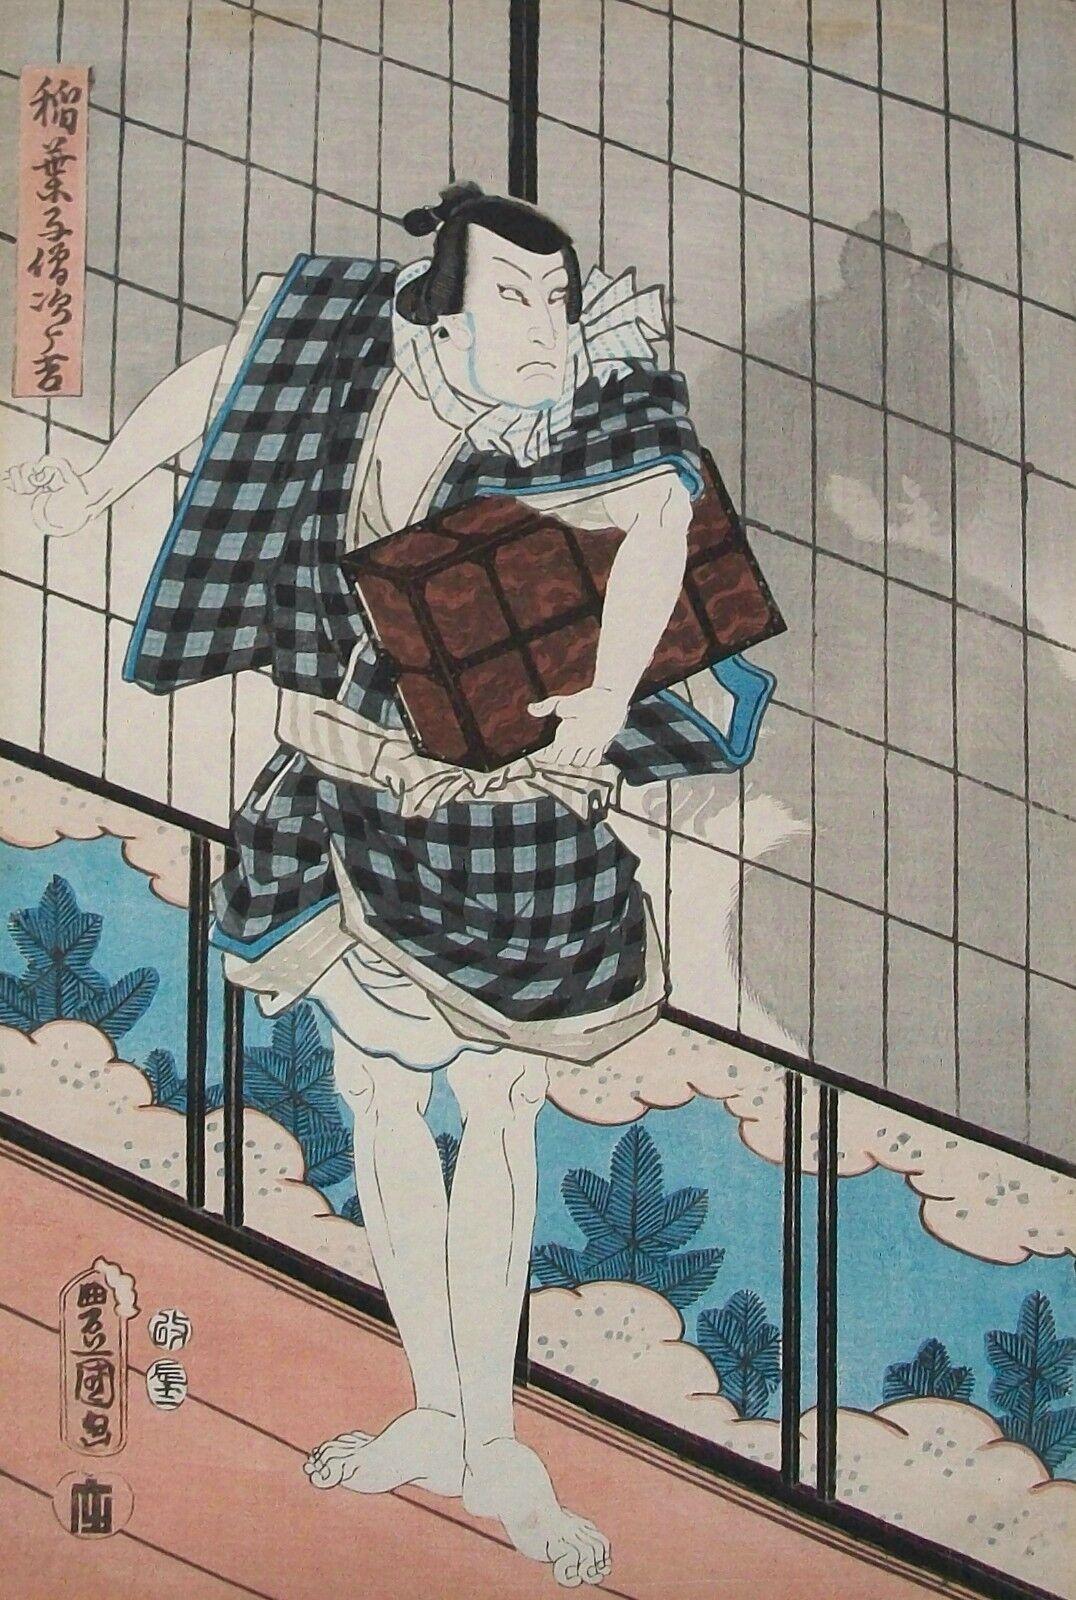 UTAGAWA KUNISADA (TOYOKUNI III 1786-1865) - 'Nezumi Kozo' (Japanese 'Robin Hood') - Rare antique woodblock print - Ichikawa Kodanji IV acting as Nezumi Kozo in the play 'Yedo Ichimura-za' Nezumi Komon Haruno Shingata - single print (not part of a